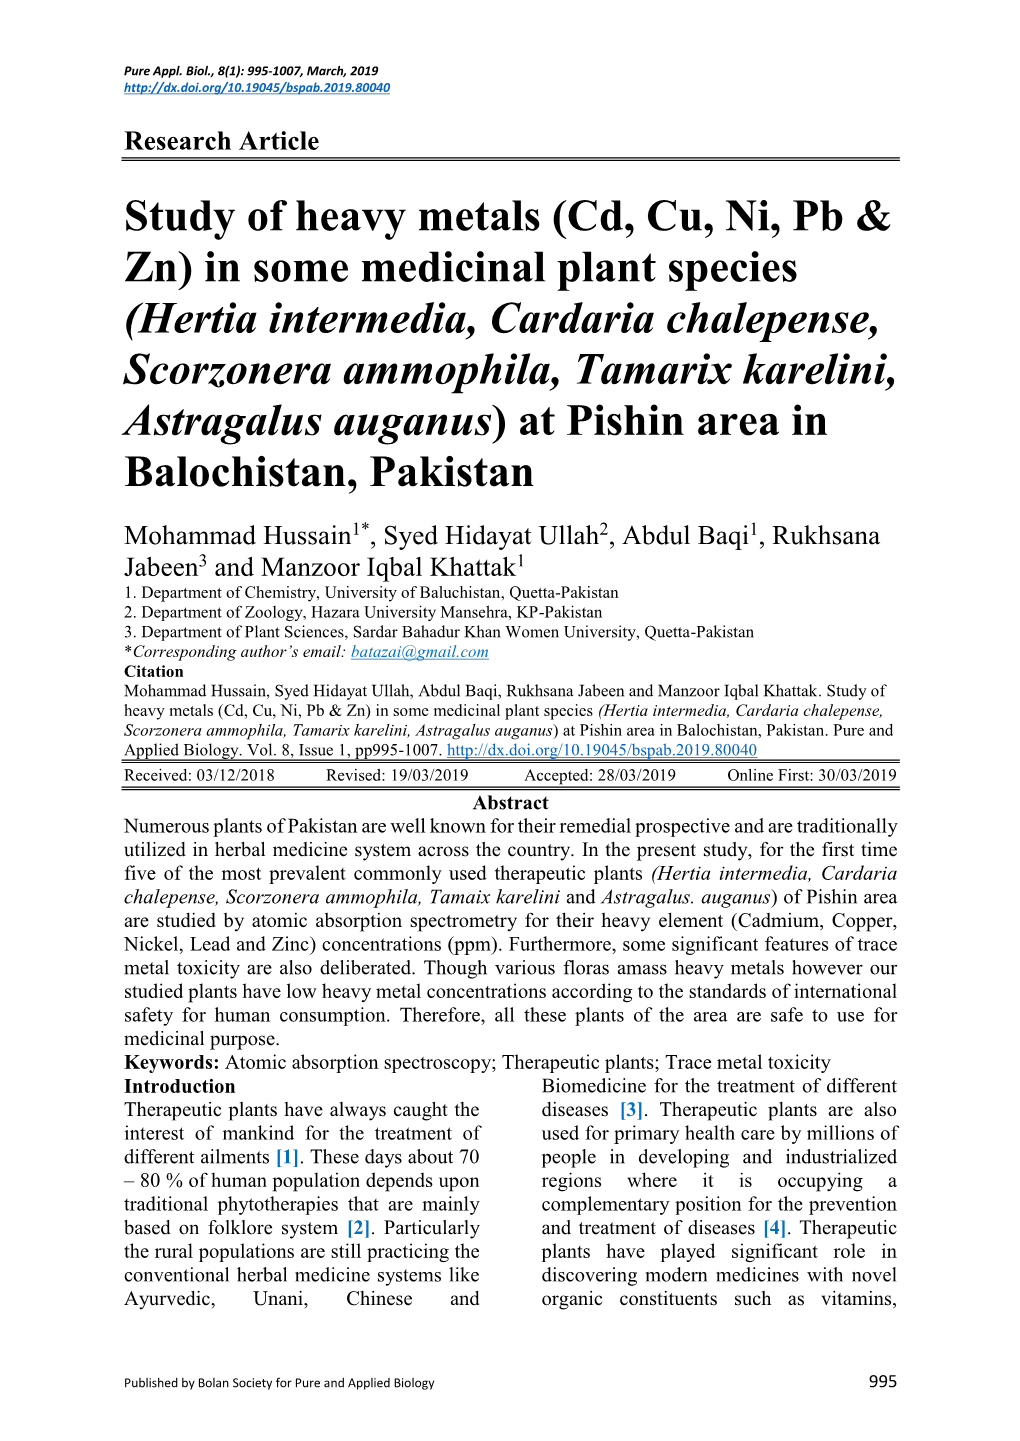 Study of Heavy Metals (Cd, Cu, Ni, Pb & Zn) in Some Medicinal Plant Species (Hertia Intermedia, Cardaria Chalepense, Scorzon